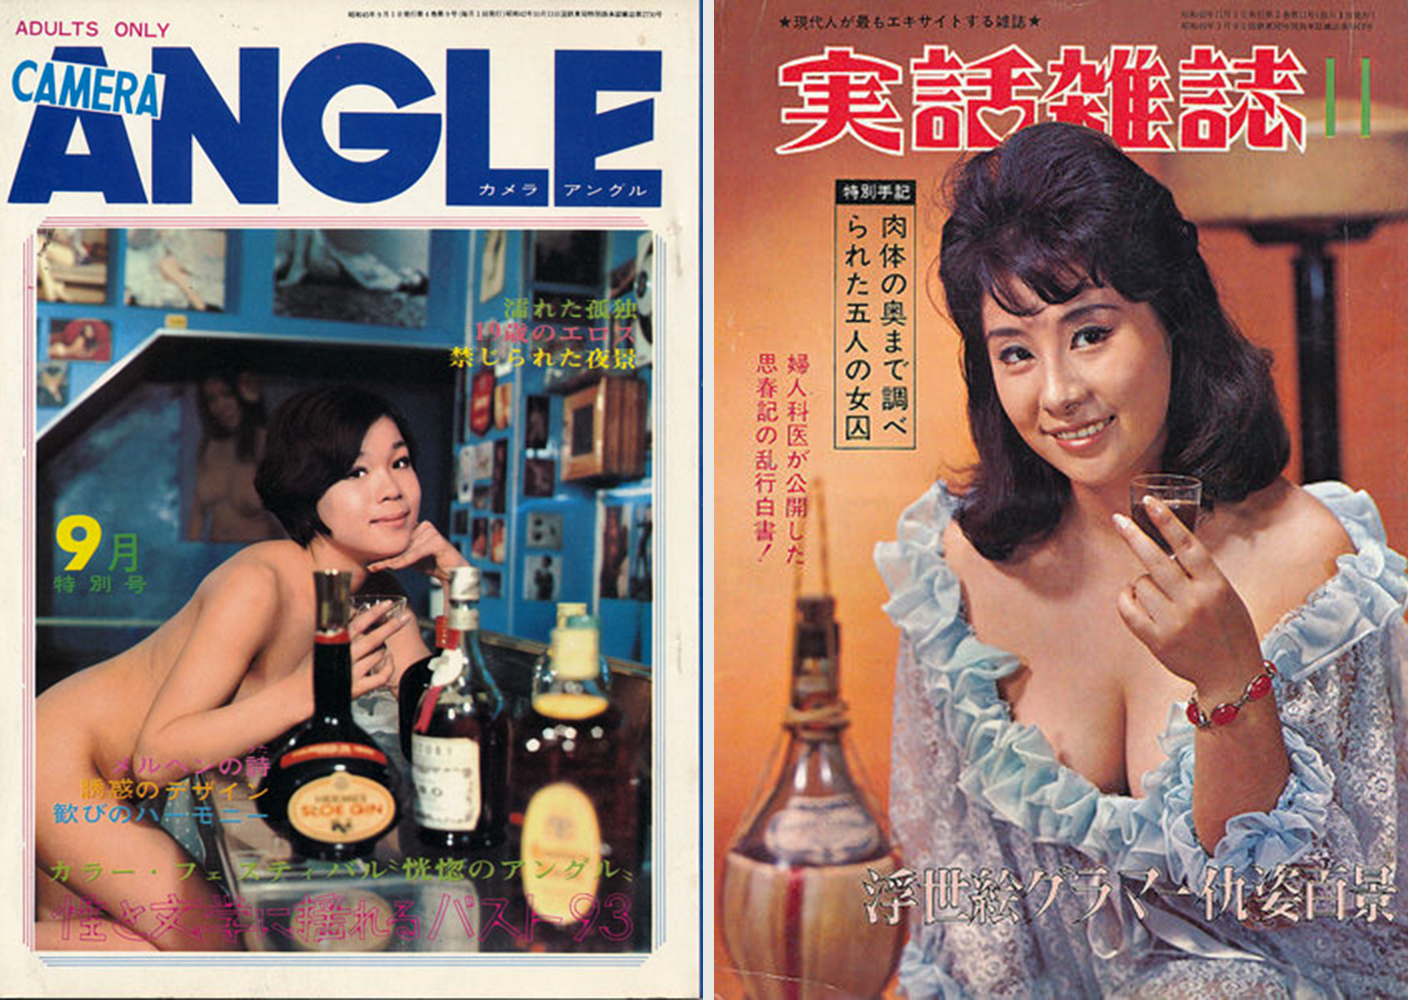 1960s Vintage Japanese Porn Magazines - Intoxicating Ladies: 25 Vintage Magazine Cover Girls Having a Drink -  Flashbak